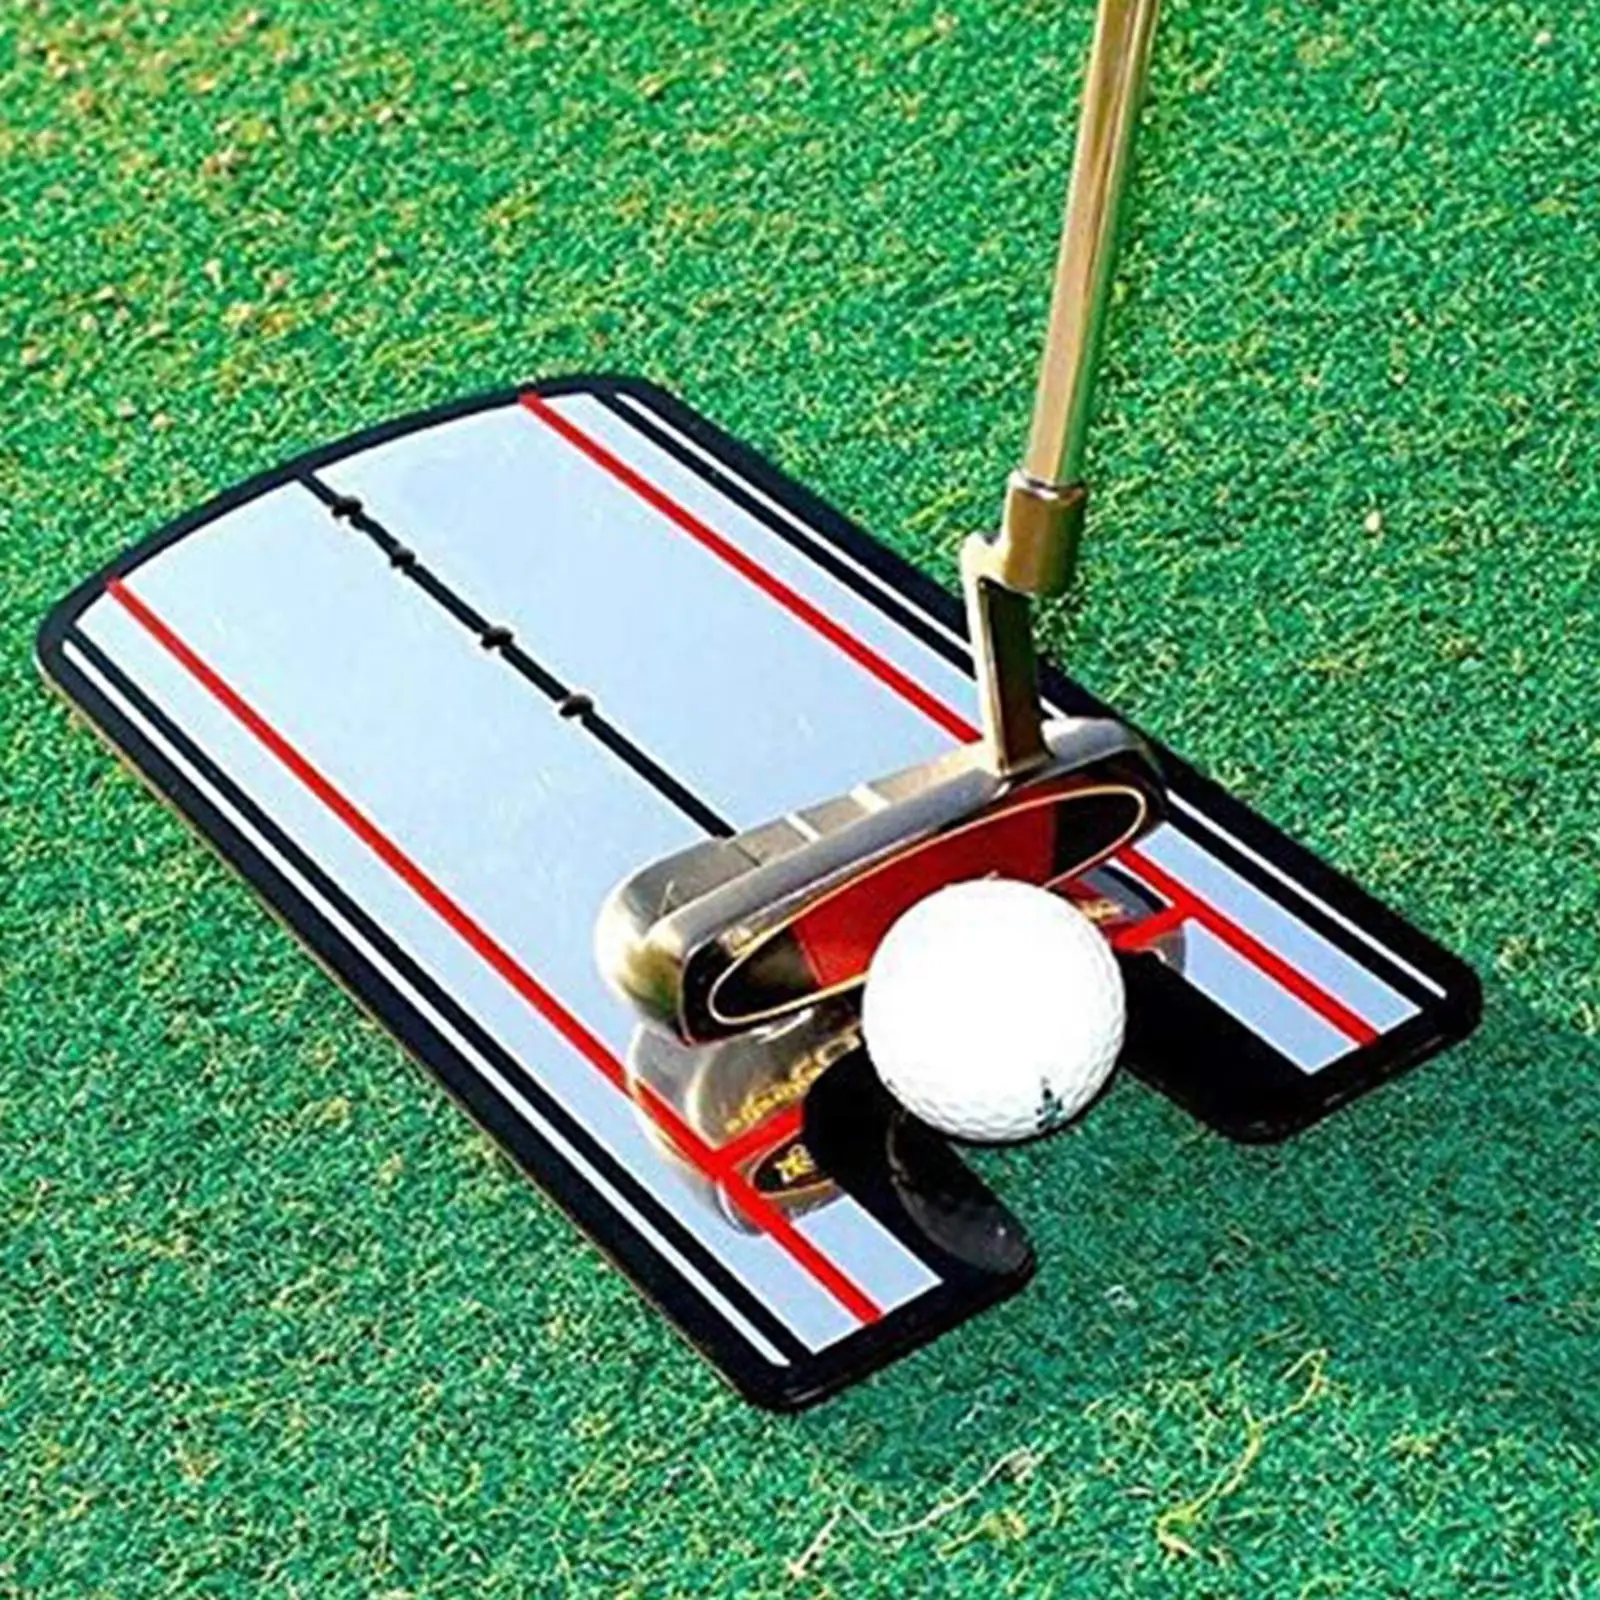 Golf Putting Mirror Alignment Training Aid Swing Trainer Golf Straight Practice Eye Line Indoor Outdoor Golf Accessorie